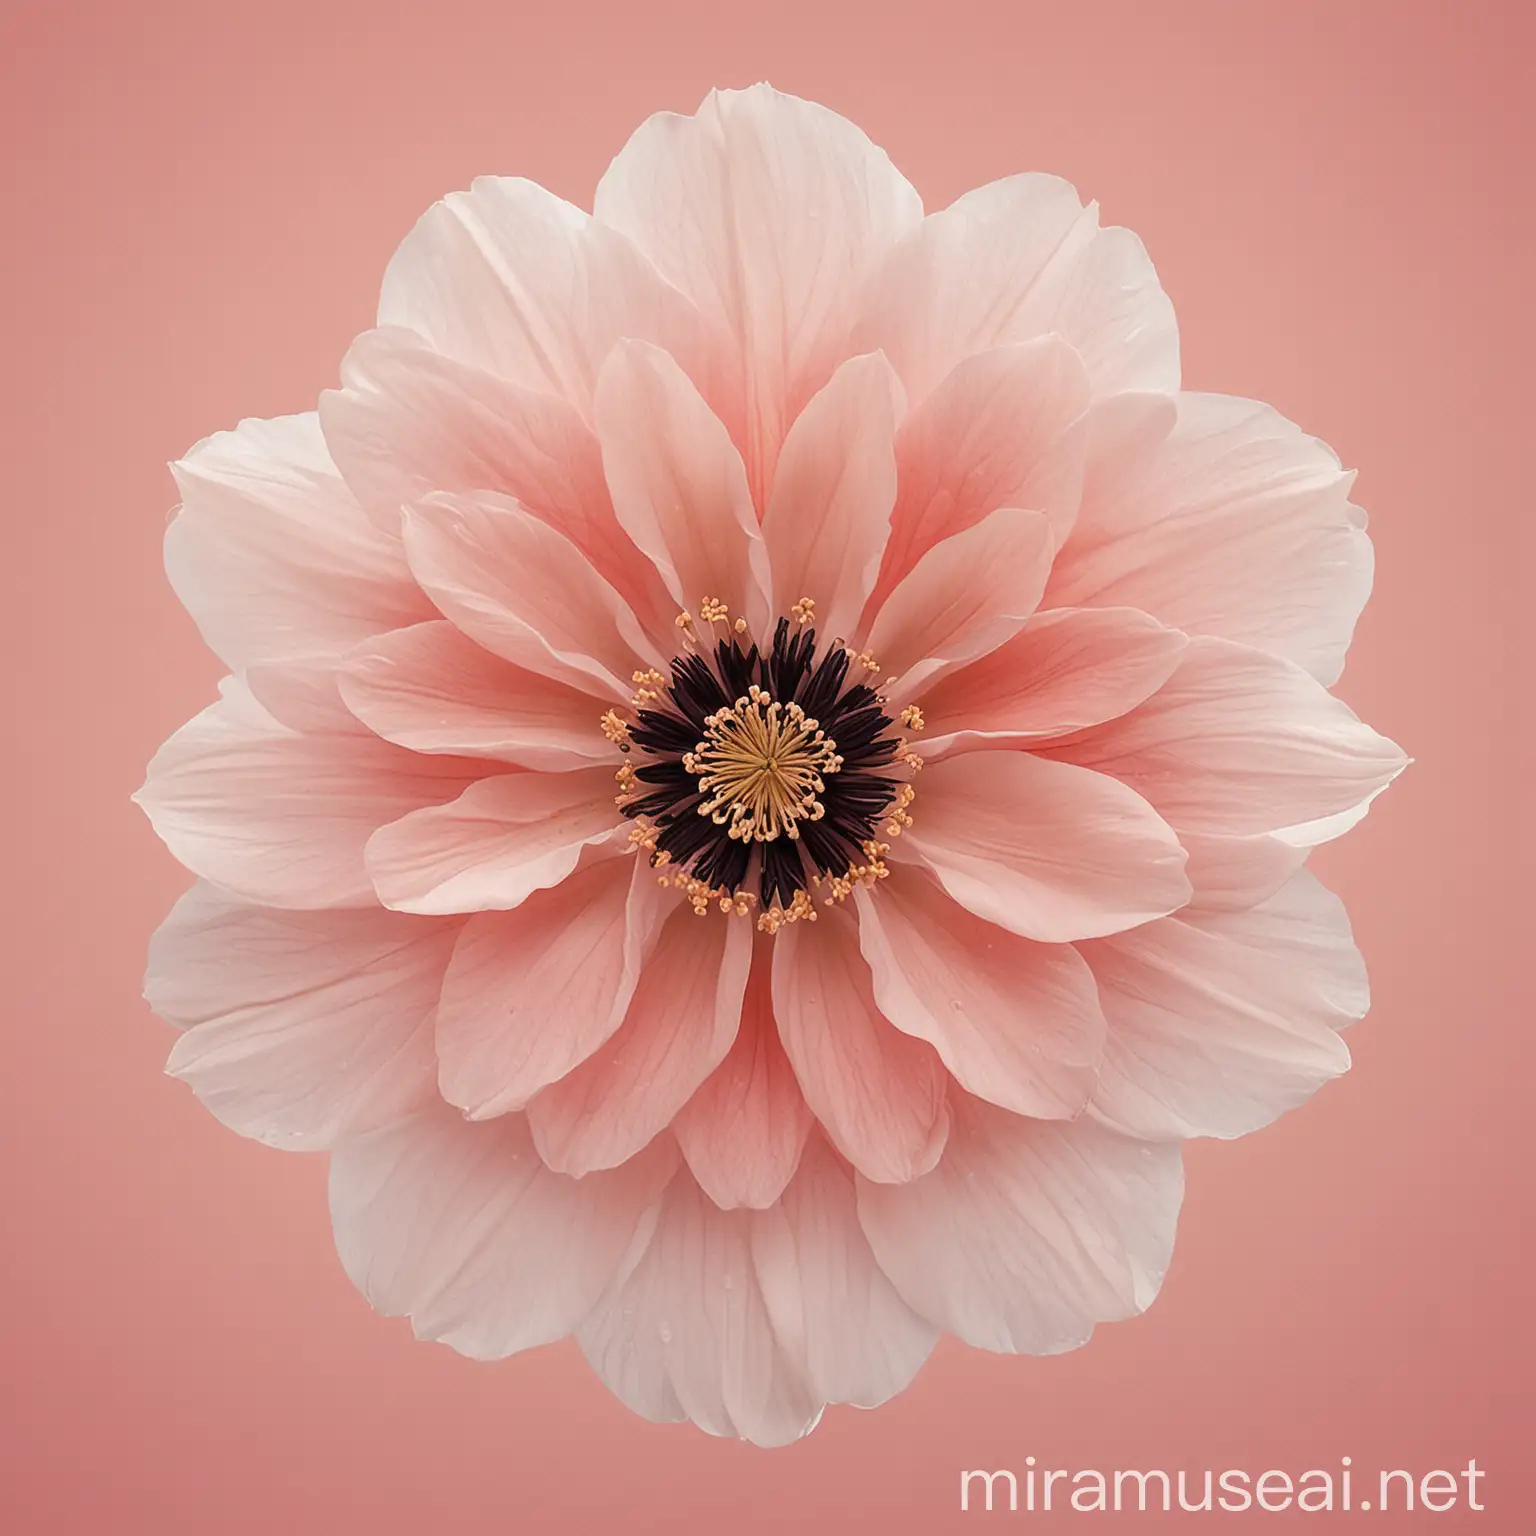 Elegant Pink Flower with Delicate Petals and Unique Spots